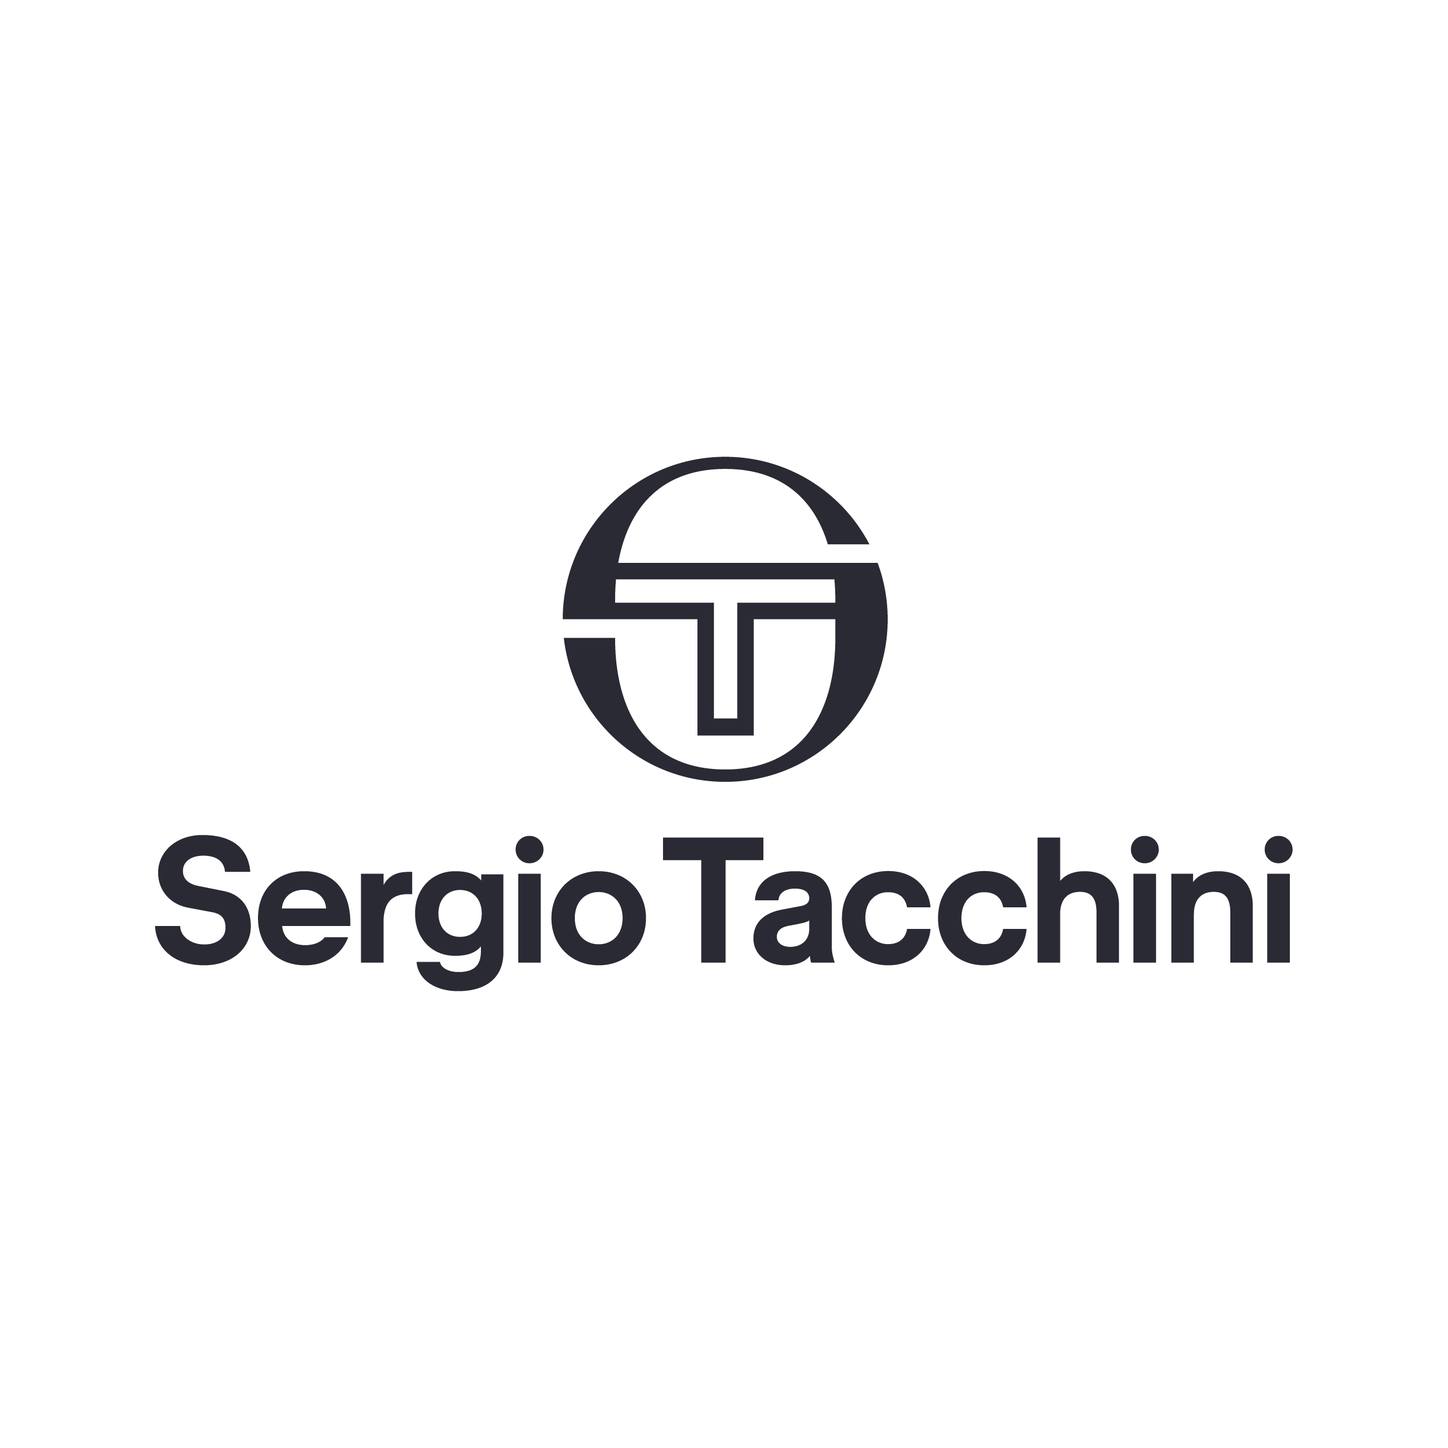 Sergio Tacchini Operations